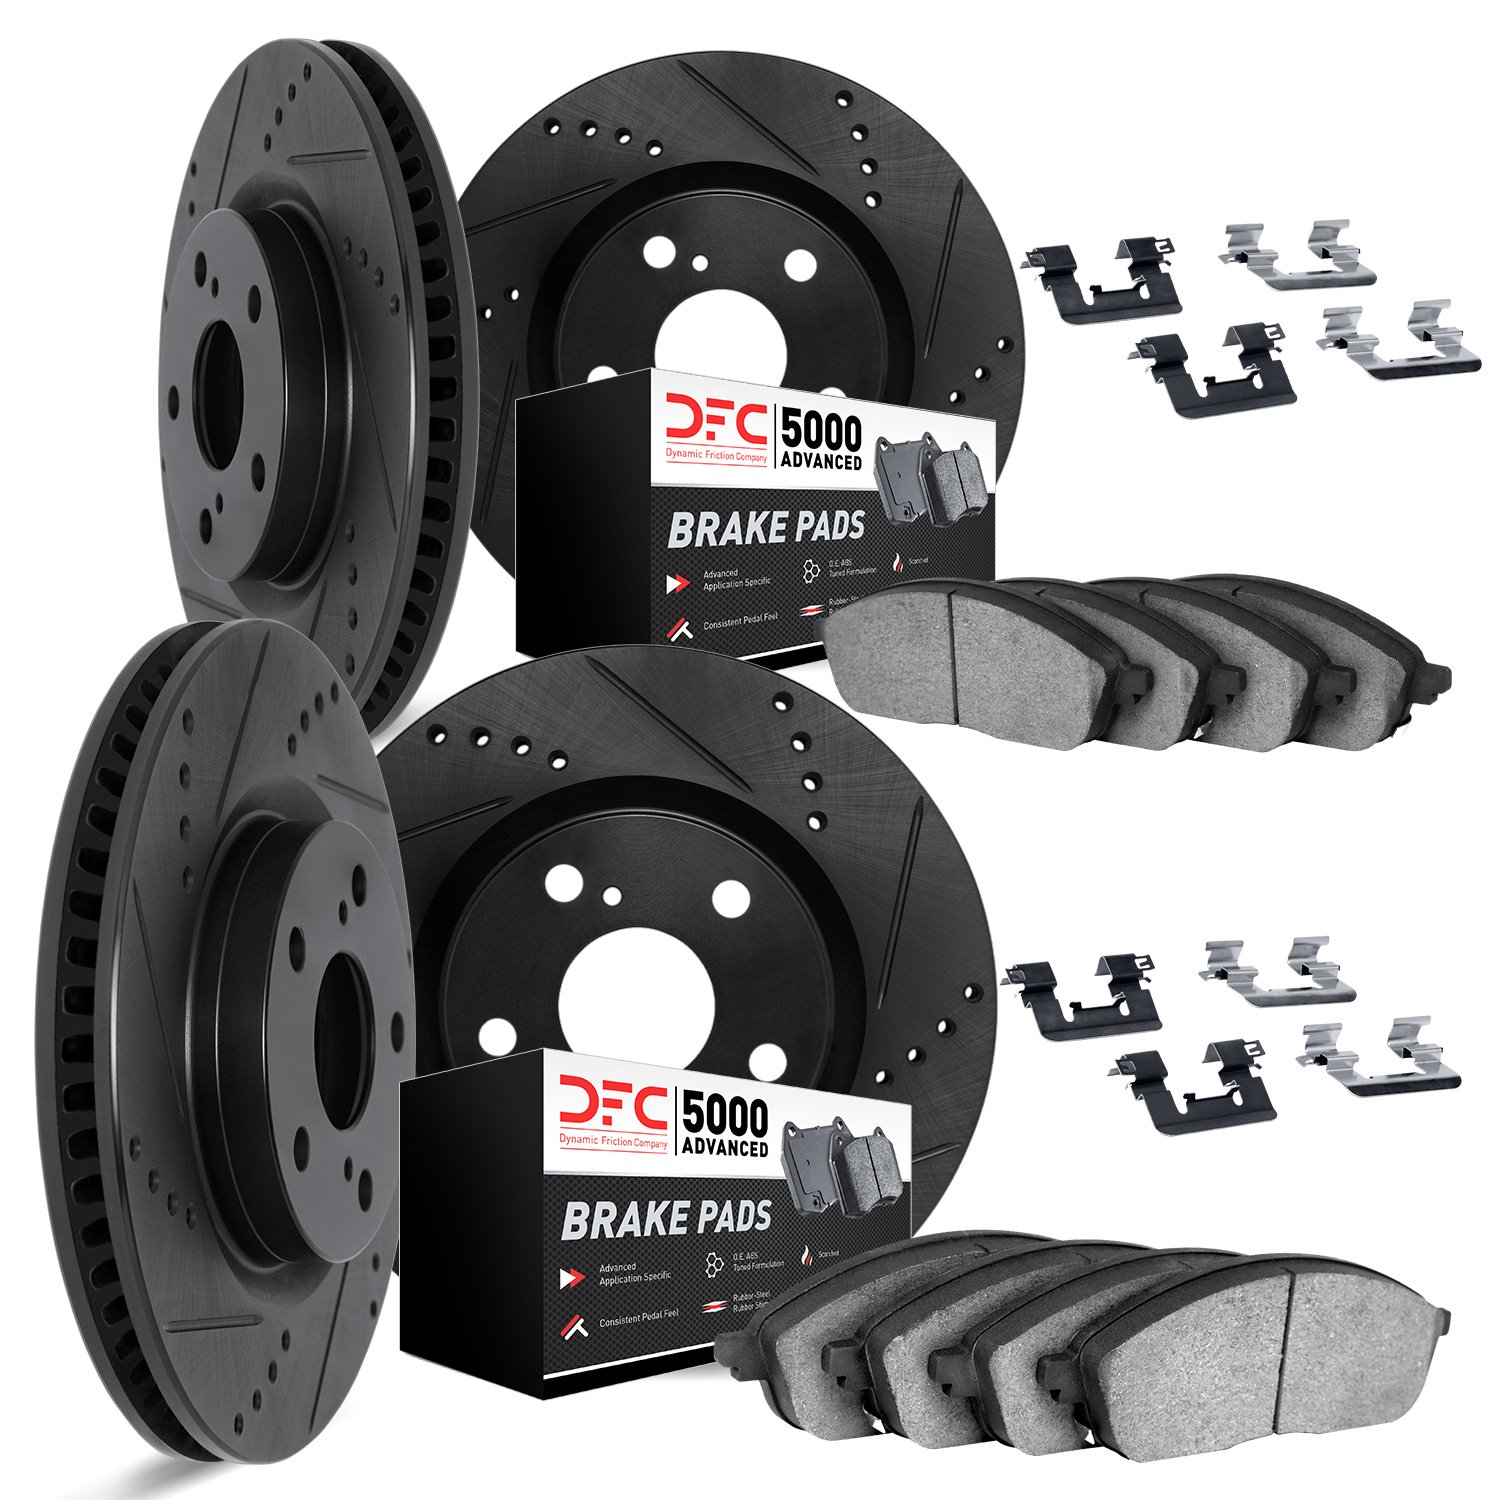 8514-01007 Drilled/Slotted Brake Rotors w/5000 Advanced Brake Pads Kit & Hardware [Black], 2009-2017 Suzuki, Position: Front and